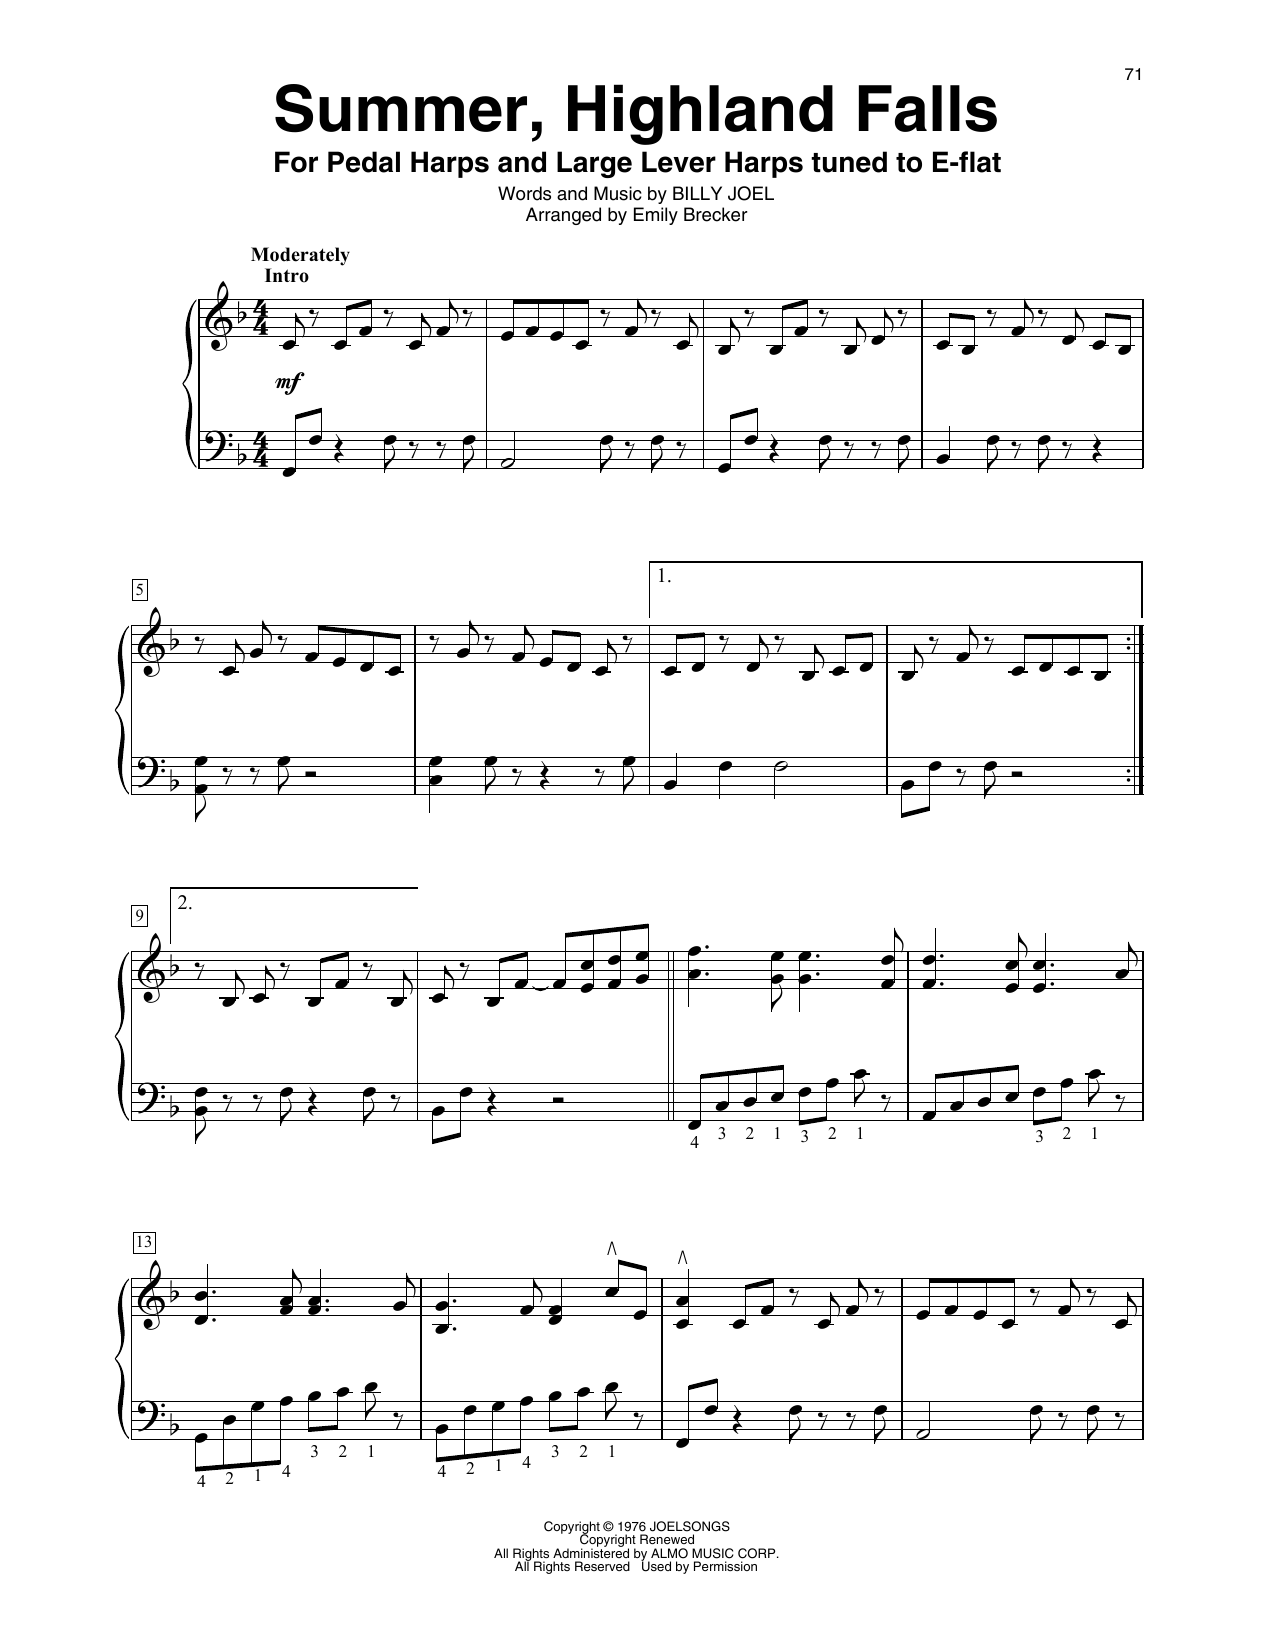 Billy Joel Summer, Highland Falls (arr. Emily Brecker) Sheet Music Notes & Chords for Harp - Download or Print PDF